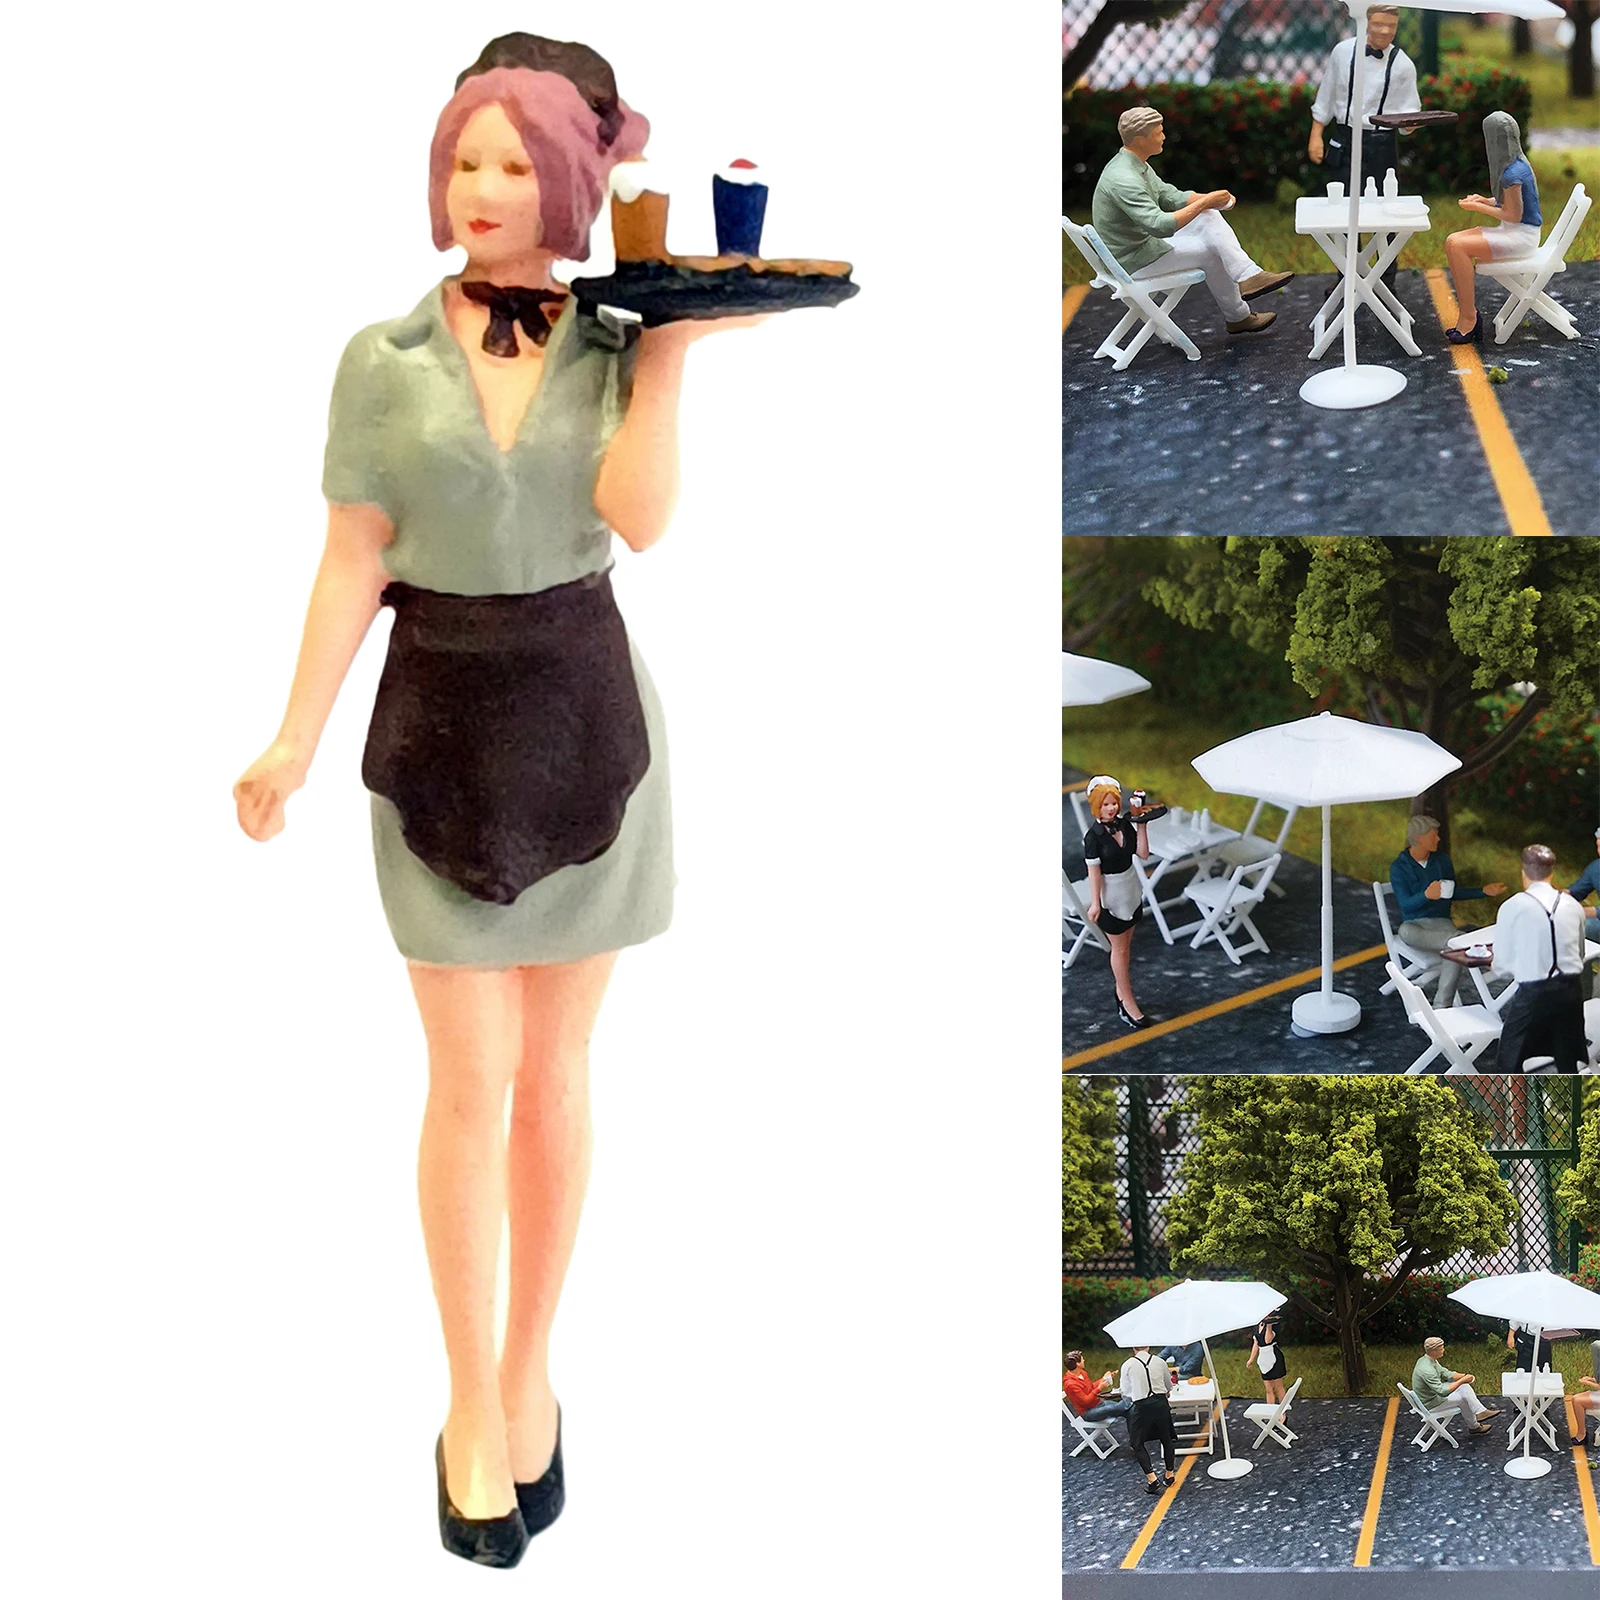 1/64 Plastic Mini Figures Waiter Scene Diorama Toy for Fire Wheel S Scale